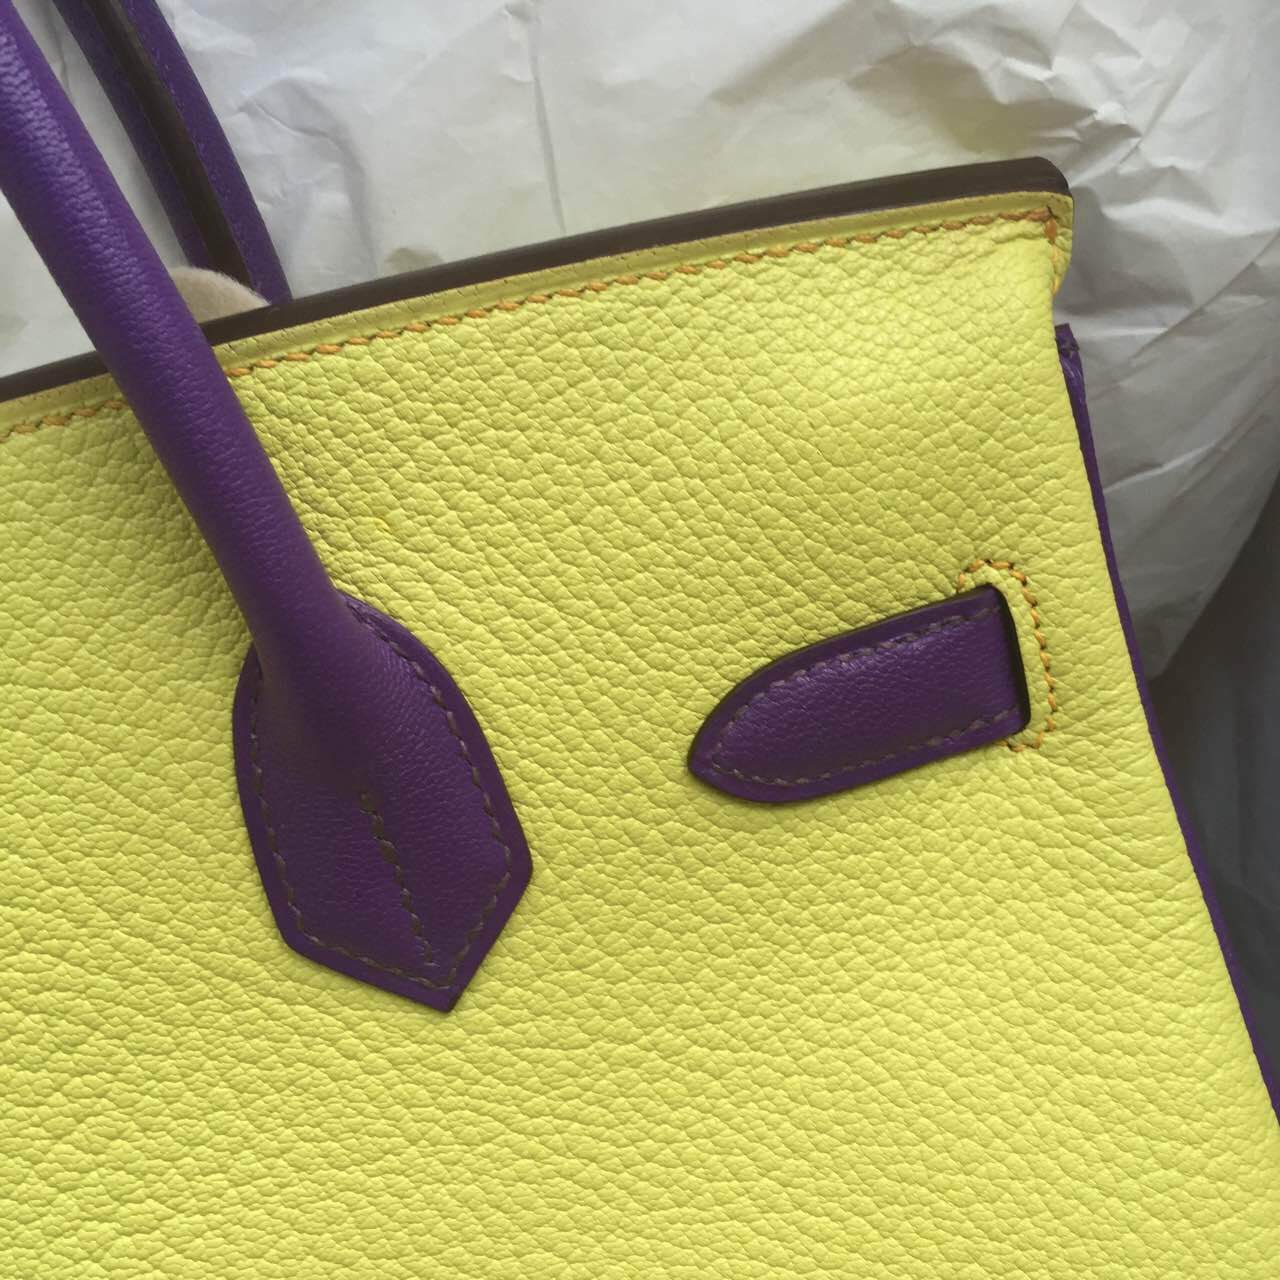 Cheap Hermes Birkin Bag 30cm Purple \u0026amp; Yellow \u0026amp; Pink Chevre Leather ...  